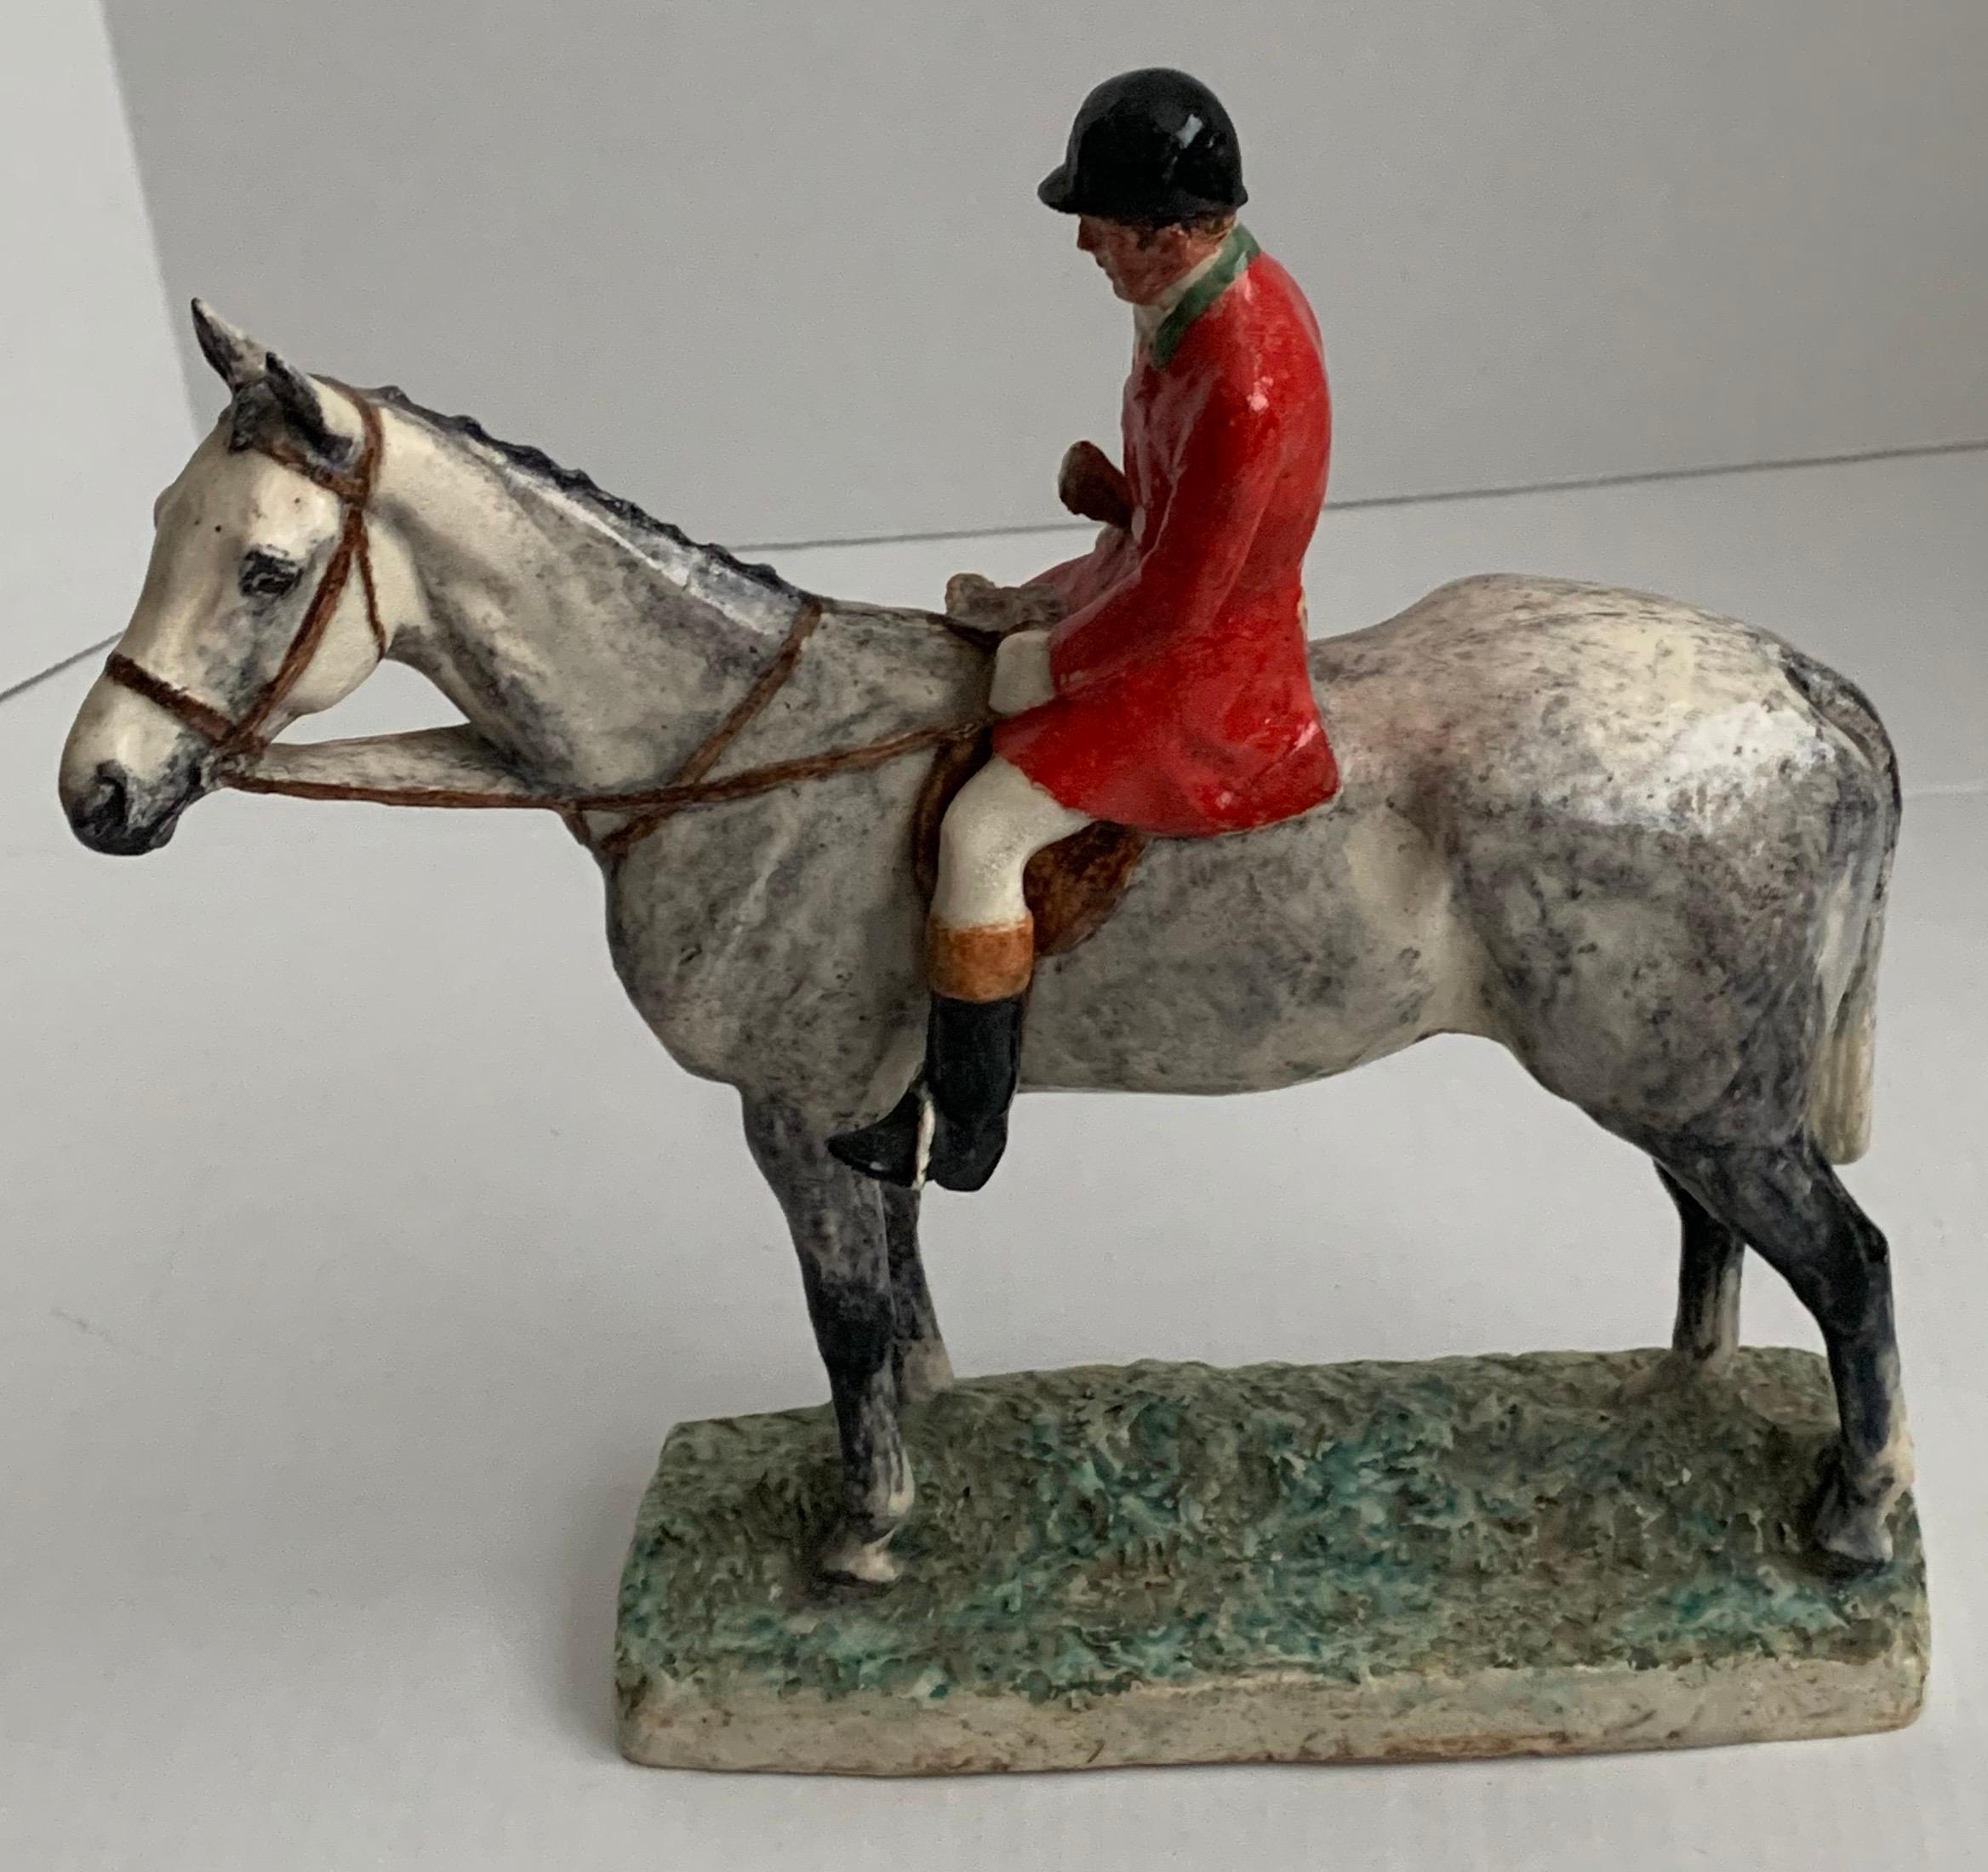 1950s ceramic equestrian figurine by Kathleen Wheeler Crump (1884-1977). Signed Kathleen Wheeler on the backside.